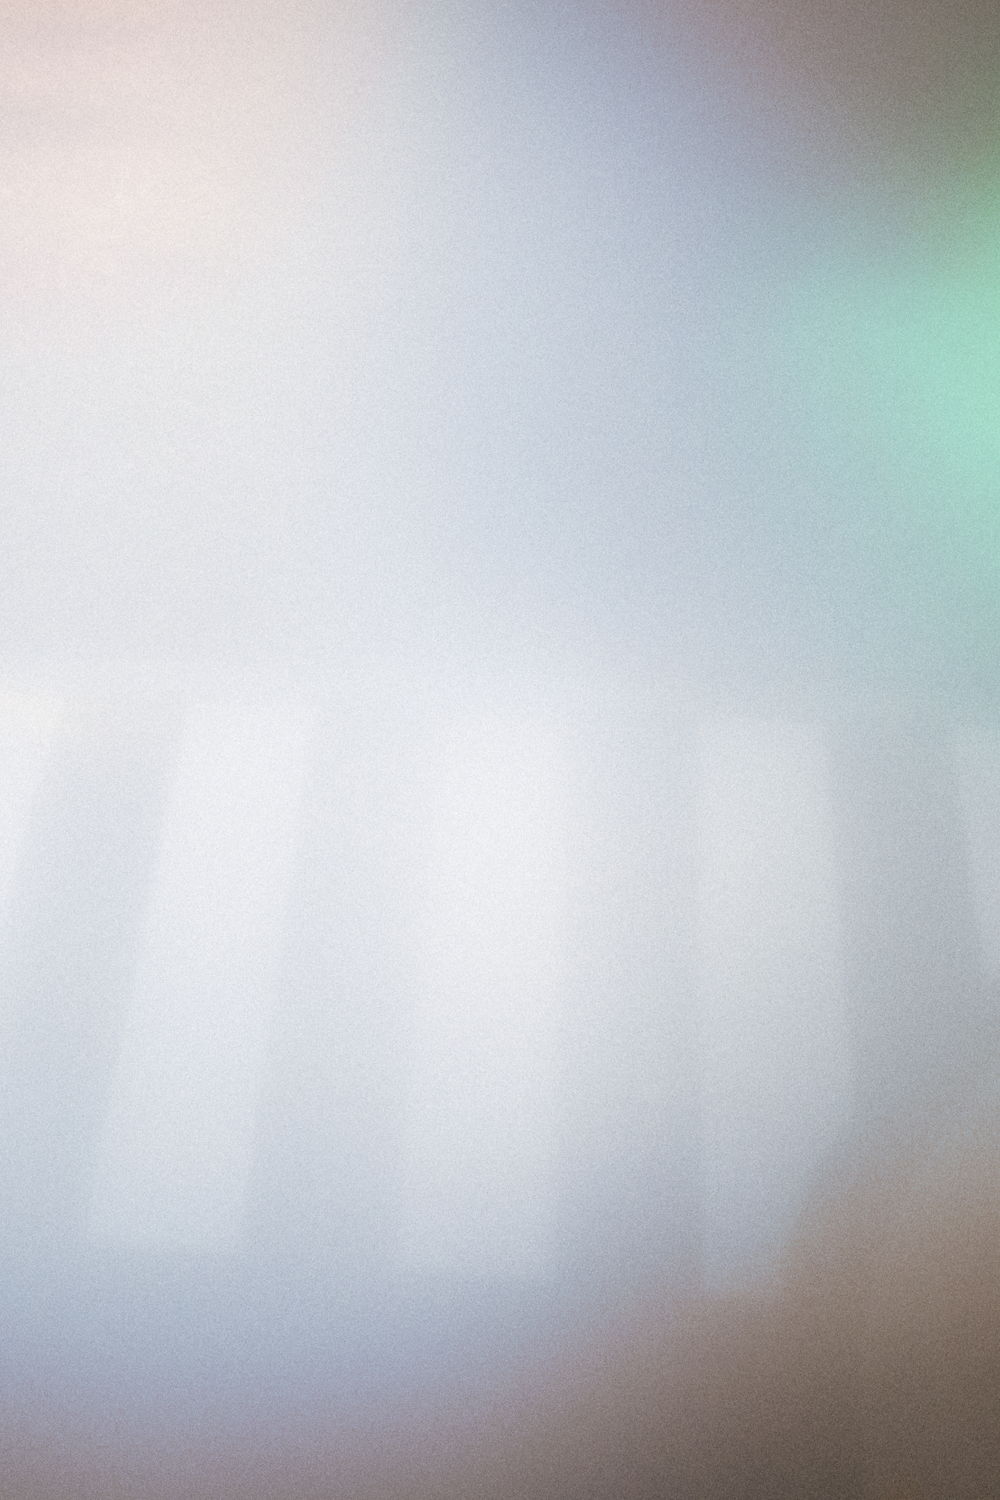 Frederik Vercruysse, Traffic Light, 2019. 60 x 40 cm © Spazio Nobile